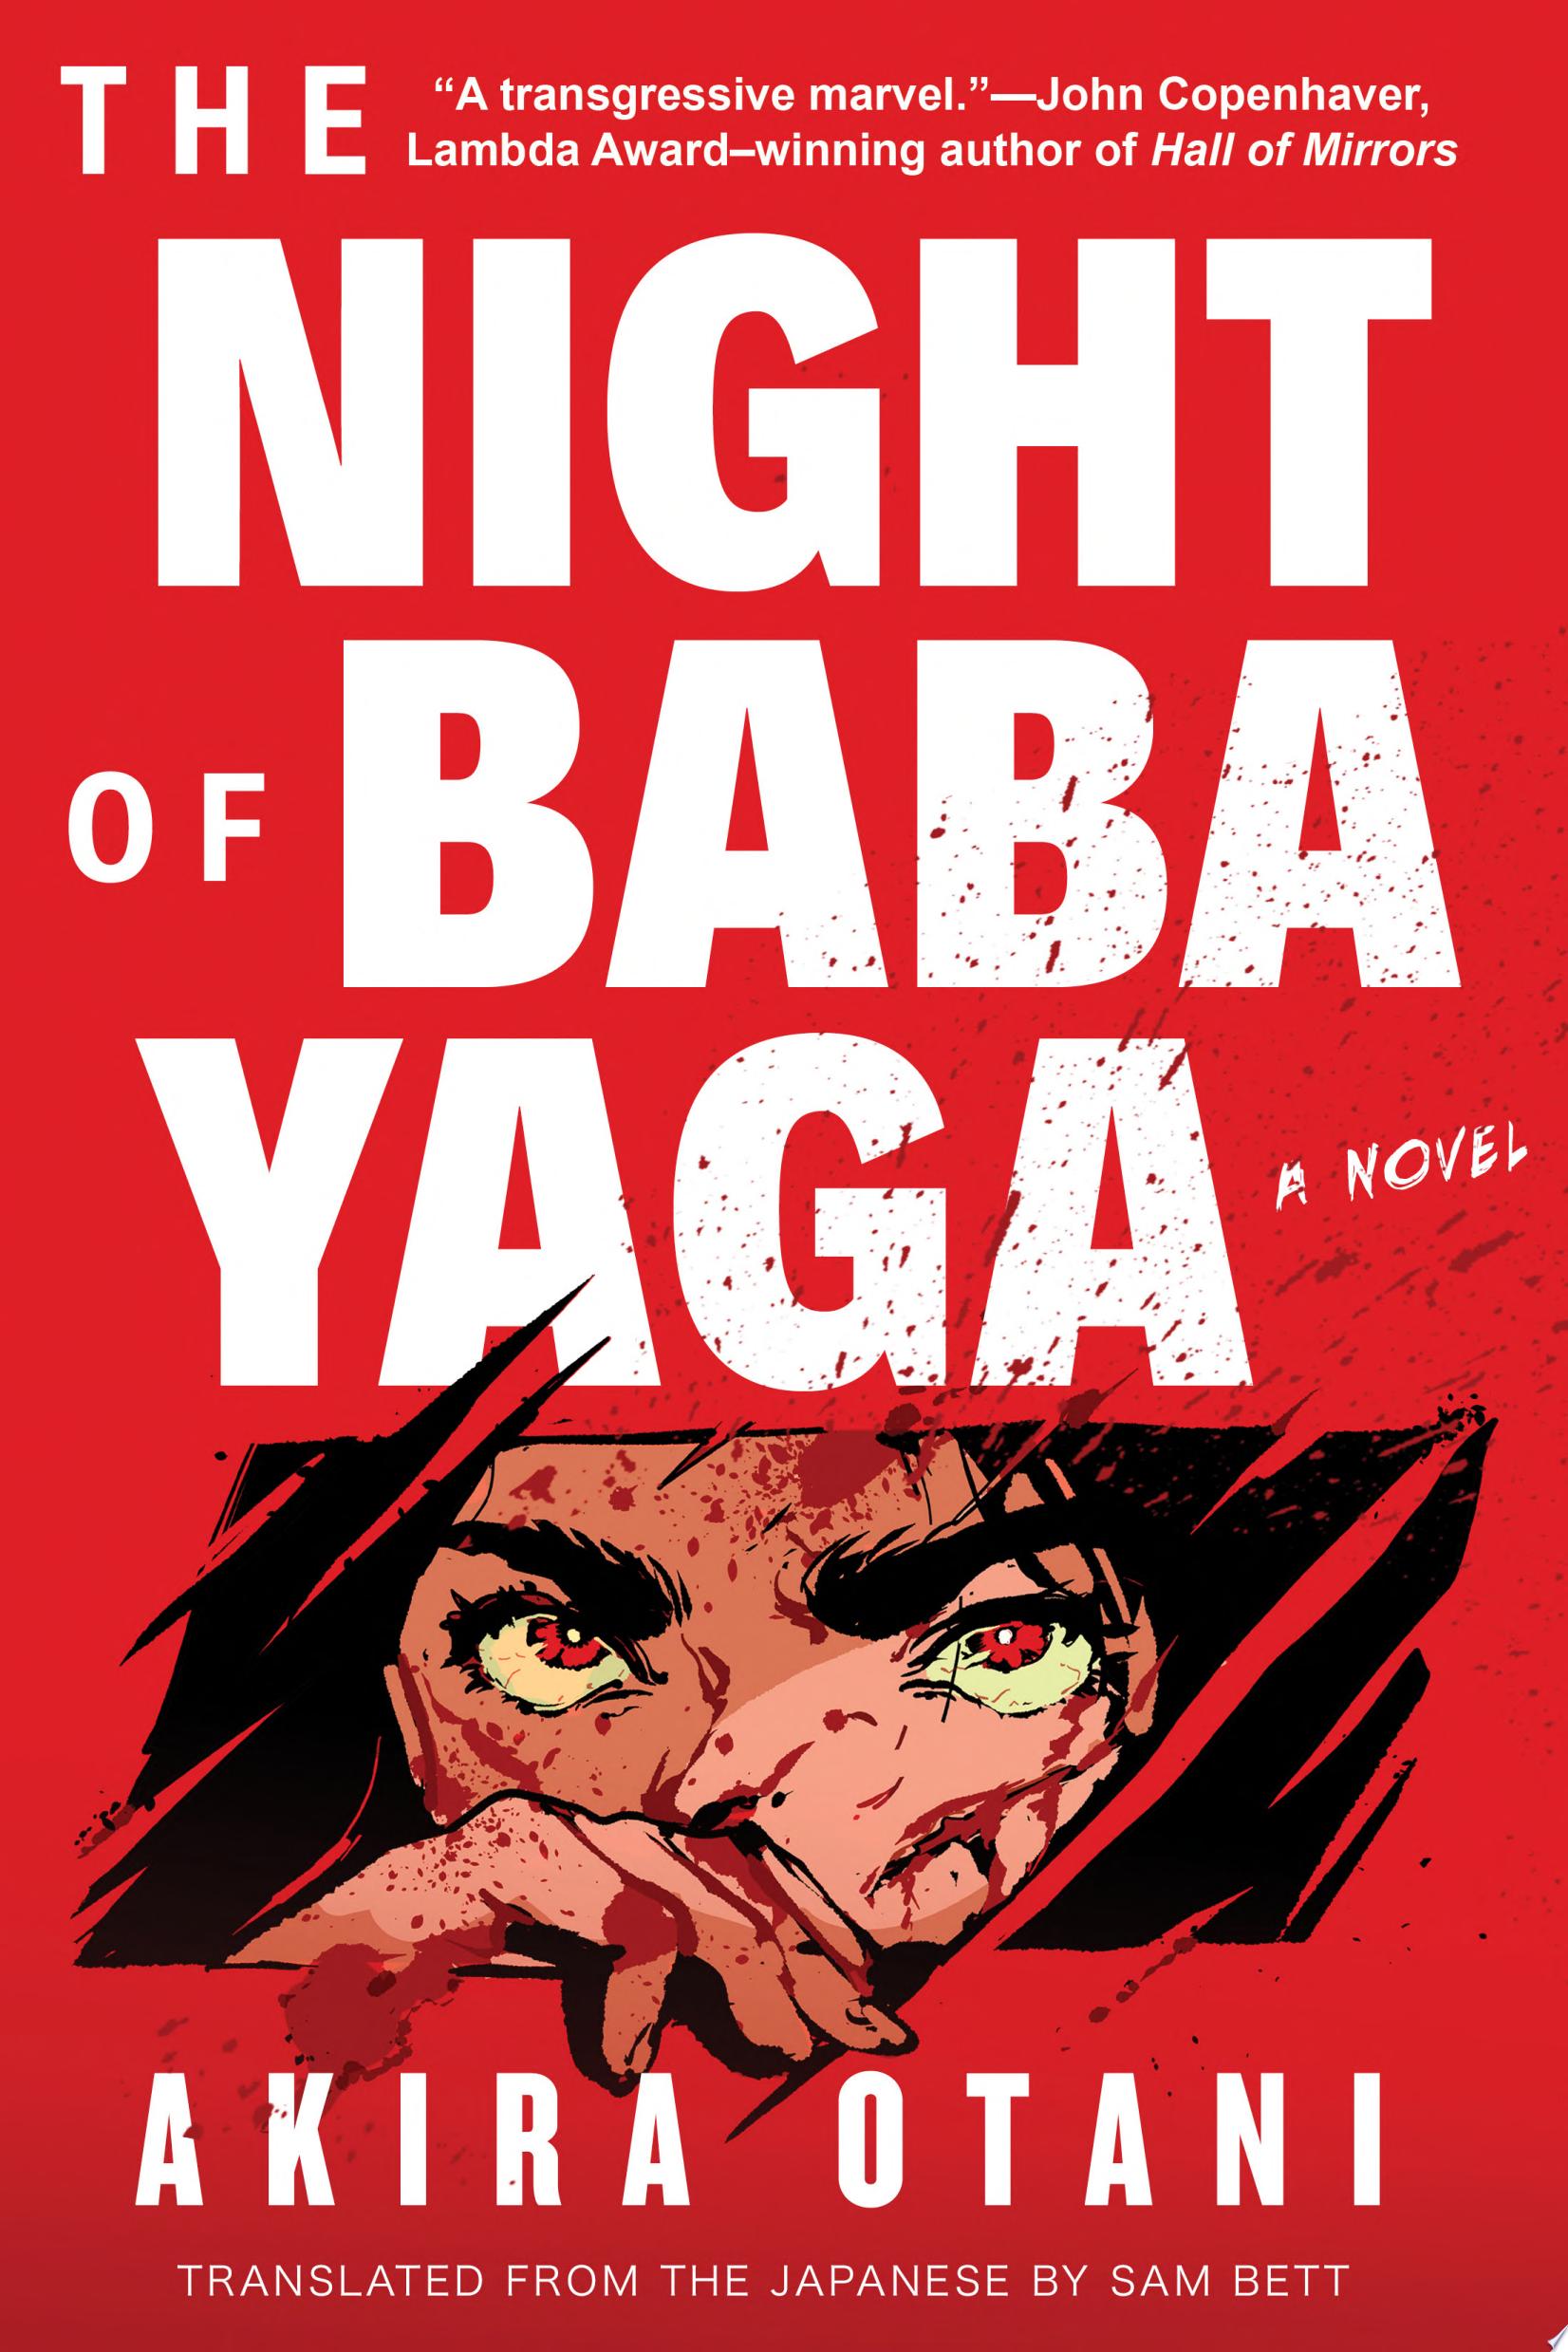 Image for "The Night of Baba Yaga"